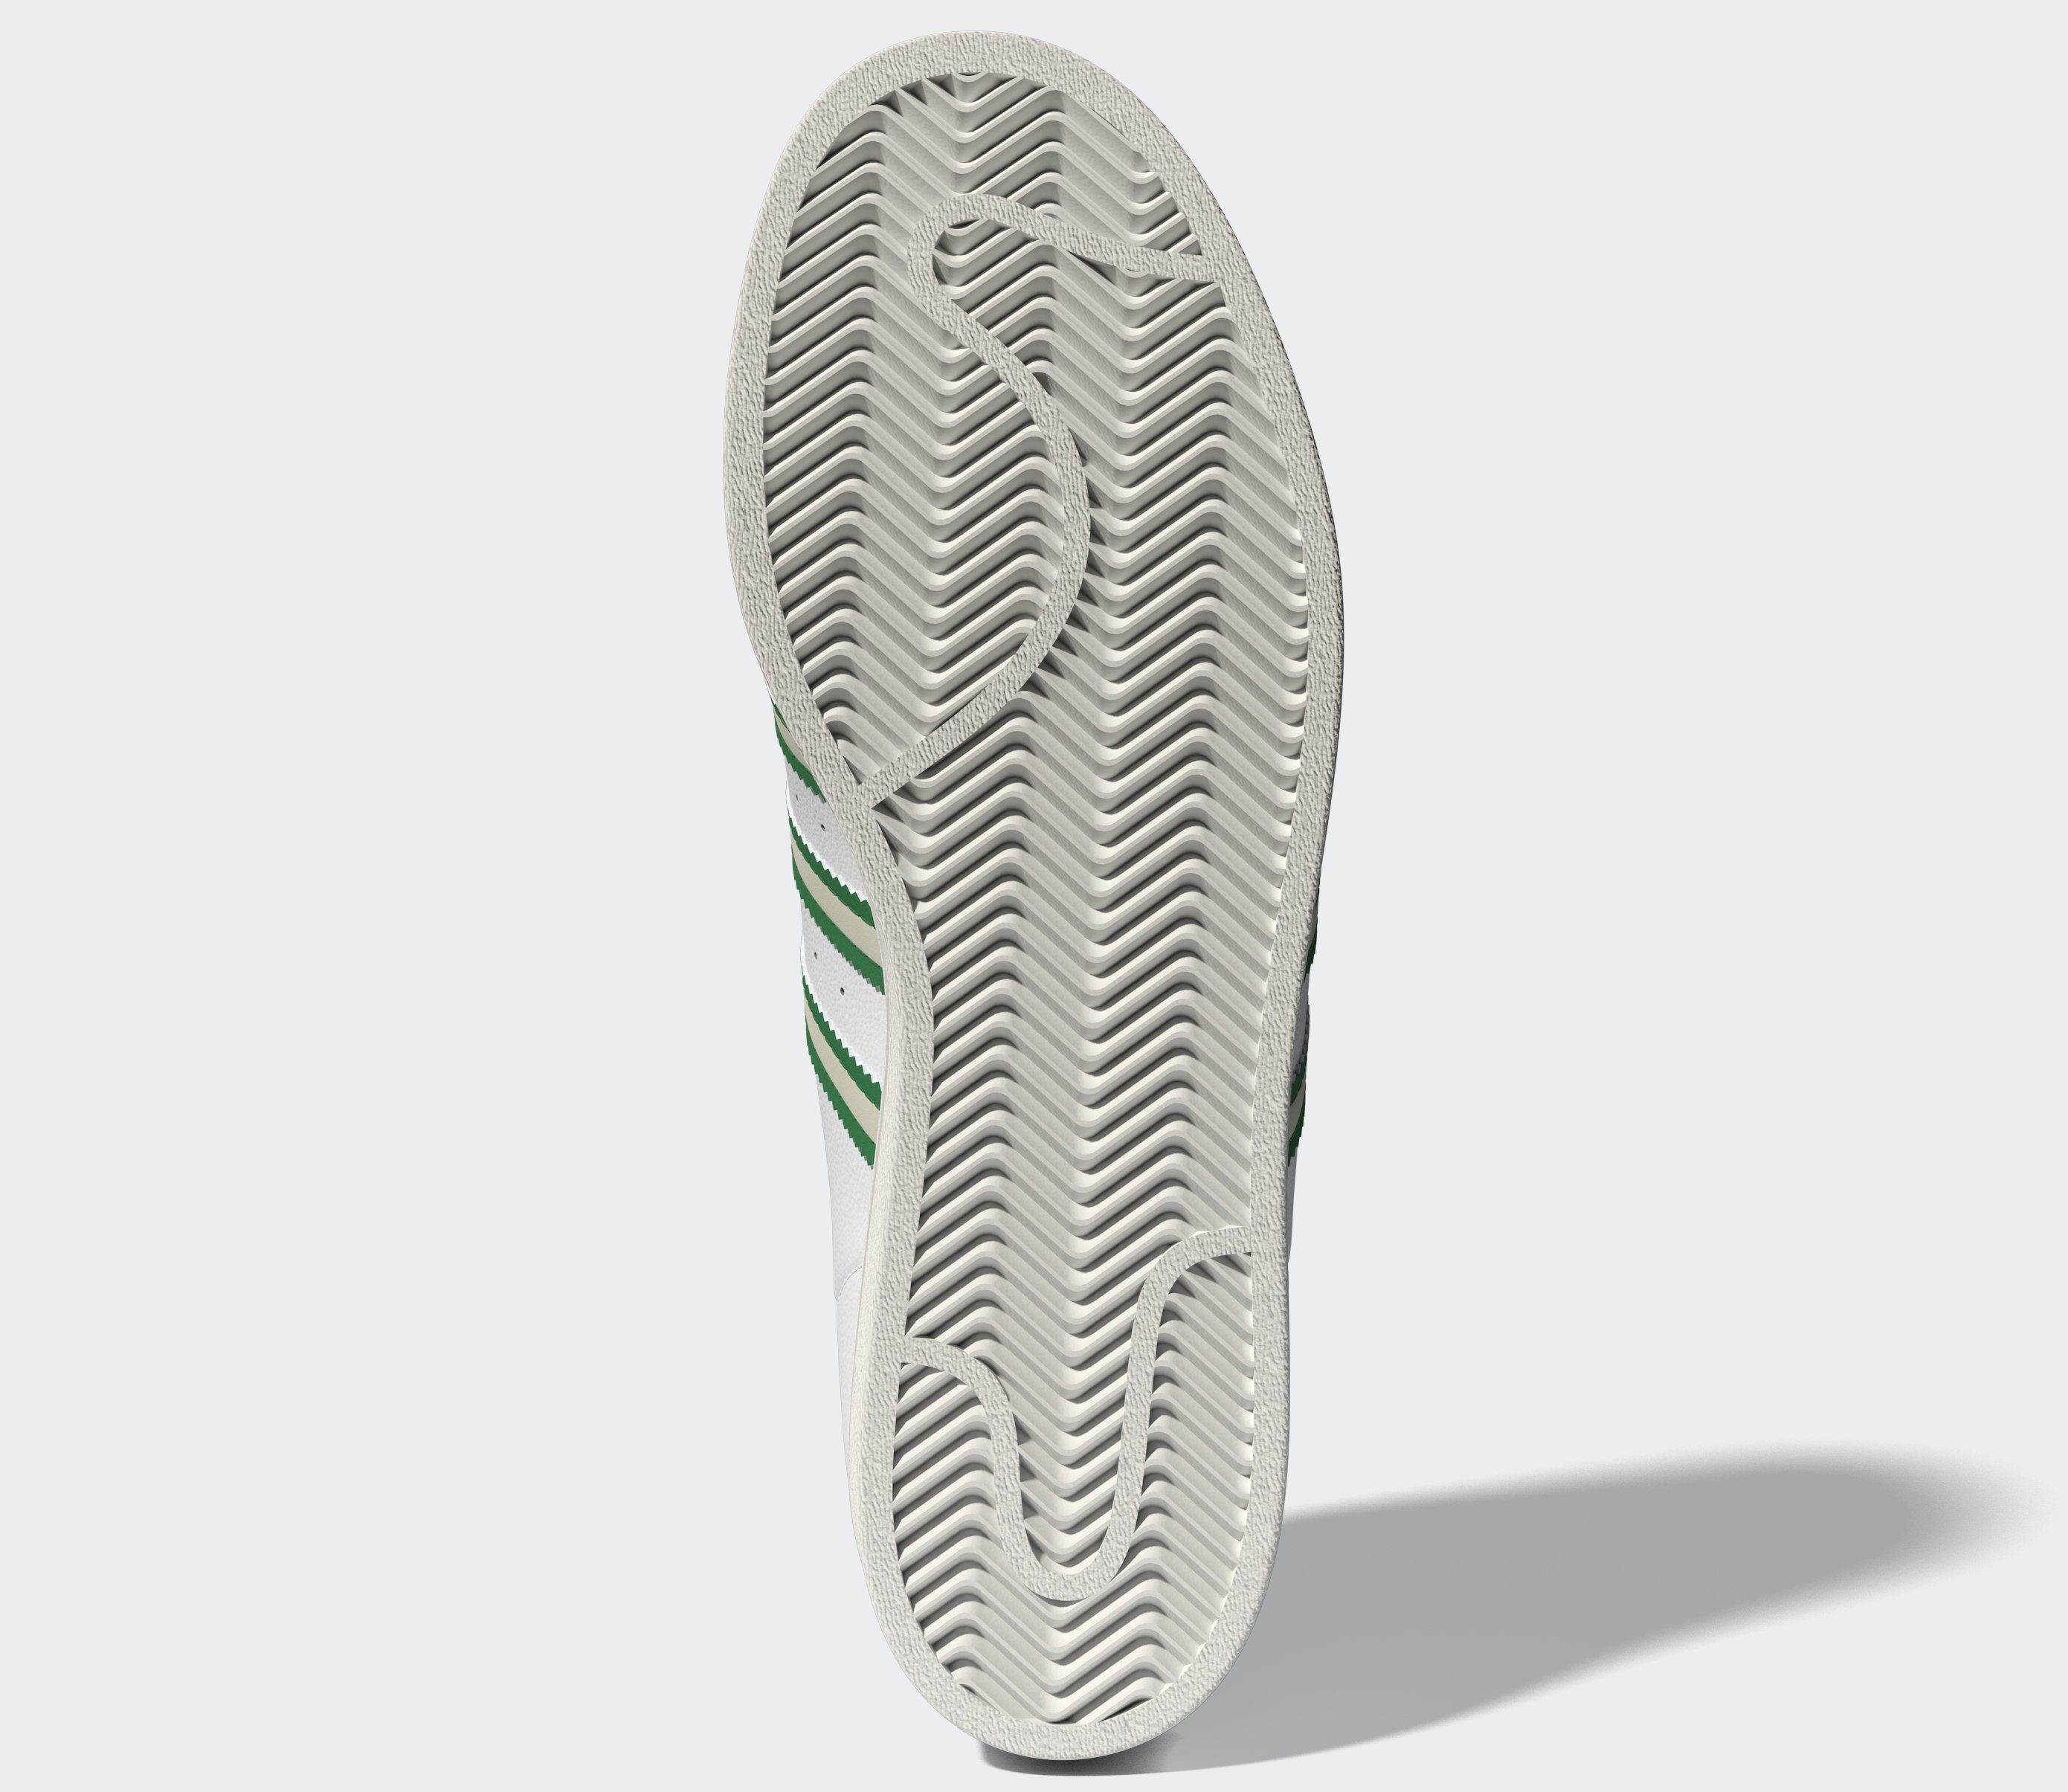 weiß-grün adidas Sneaker SUPERSTAR Originals